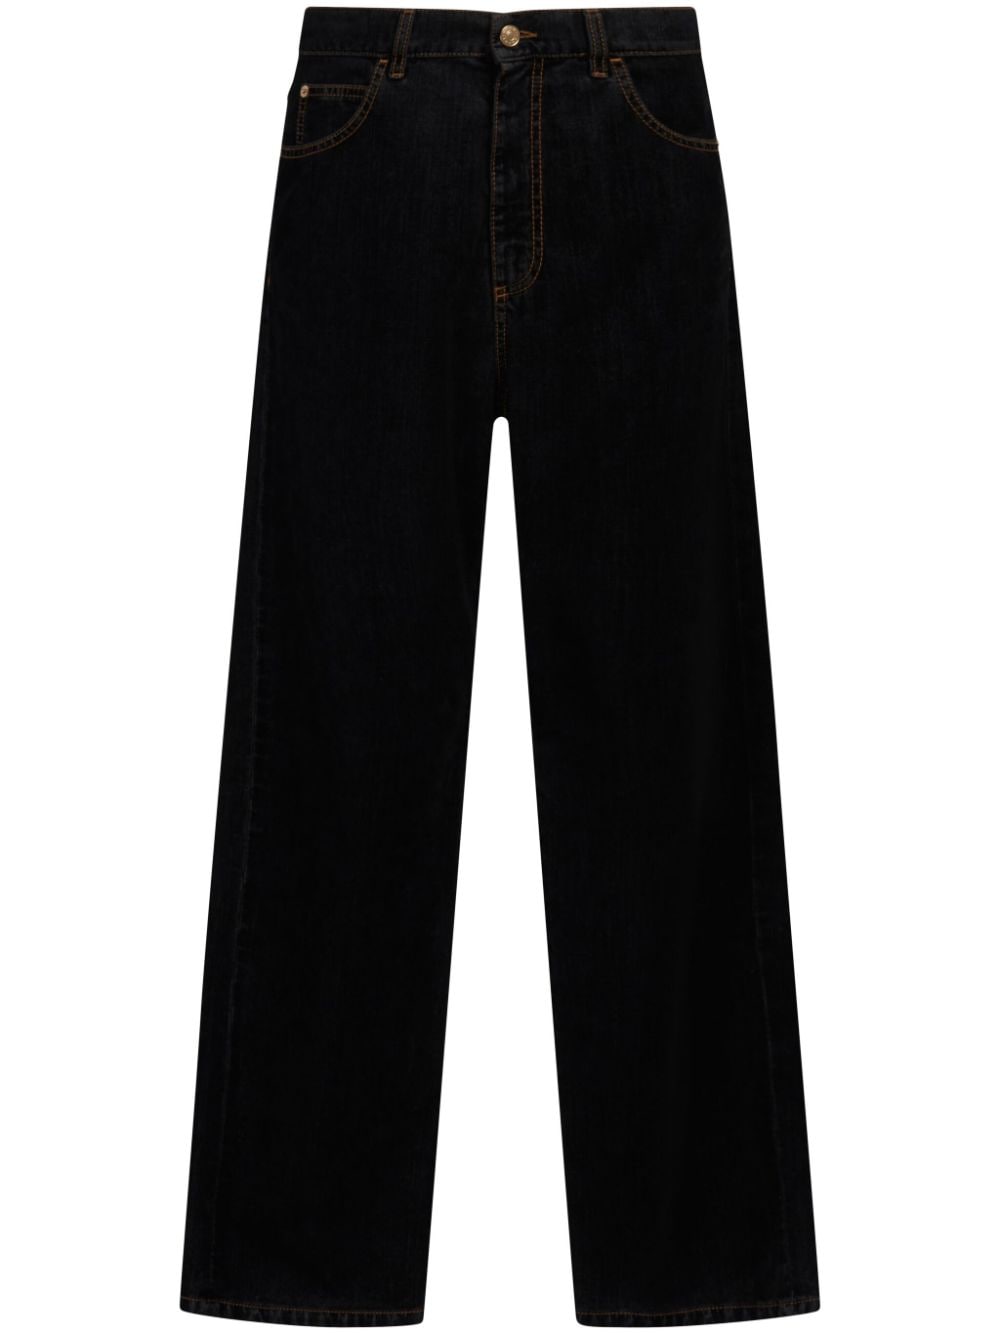 Straight-leg cotton jeans<BR/><BR/><BR/>